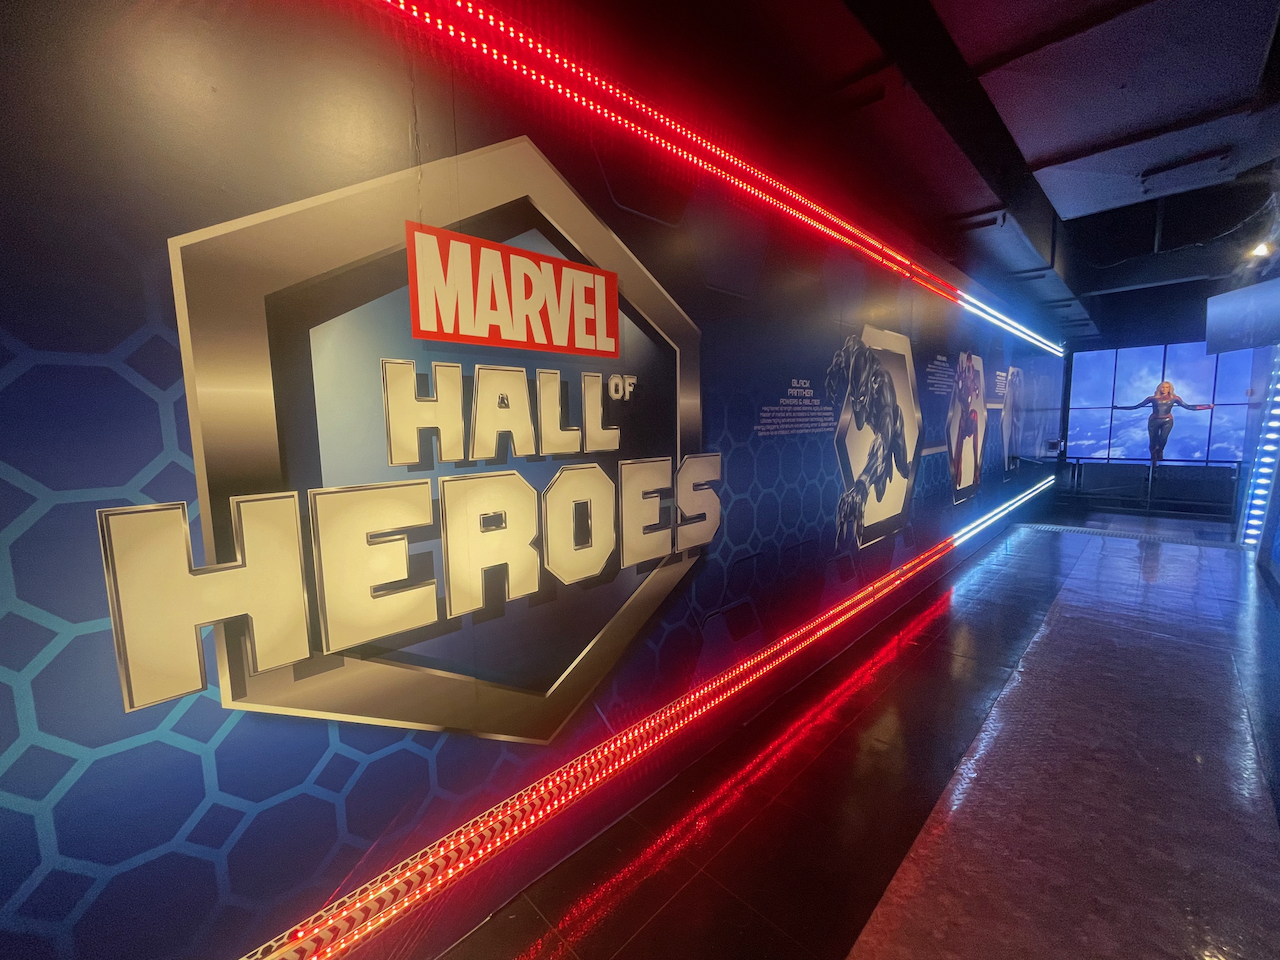 Marvels Hall of Heroes Madame Tussauds wax figure at Madame Tussauds New York